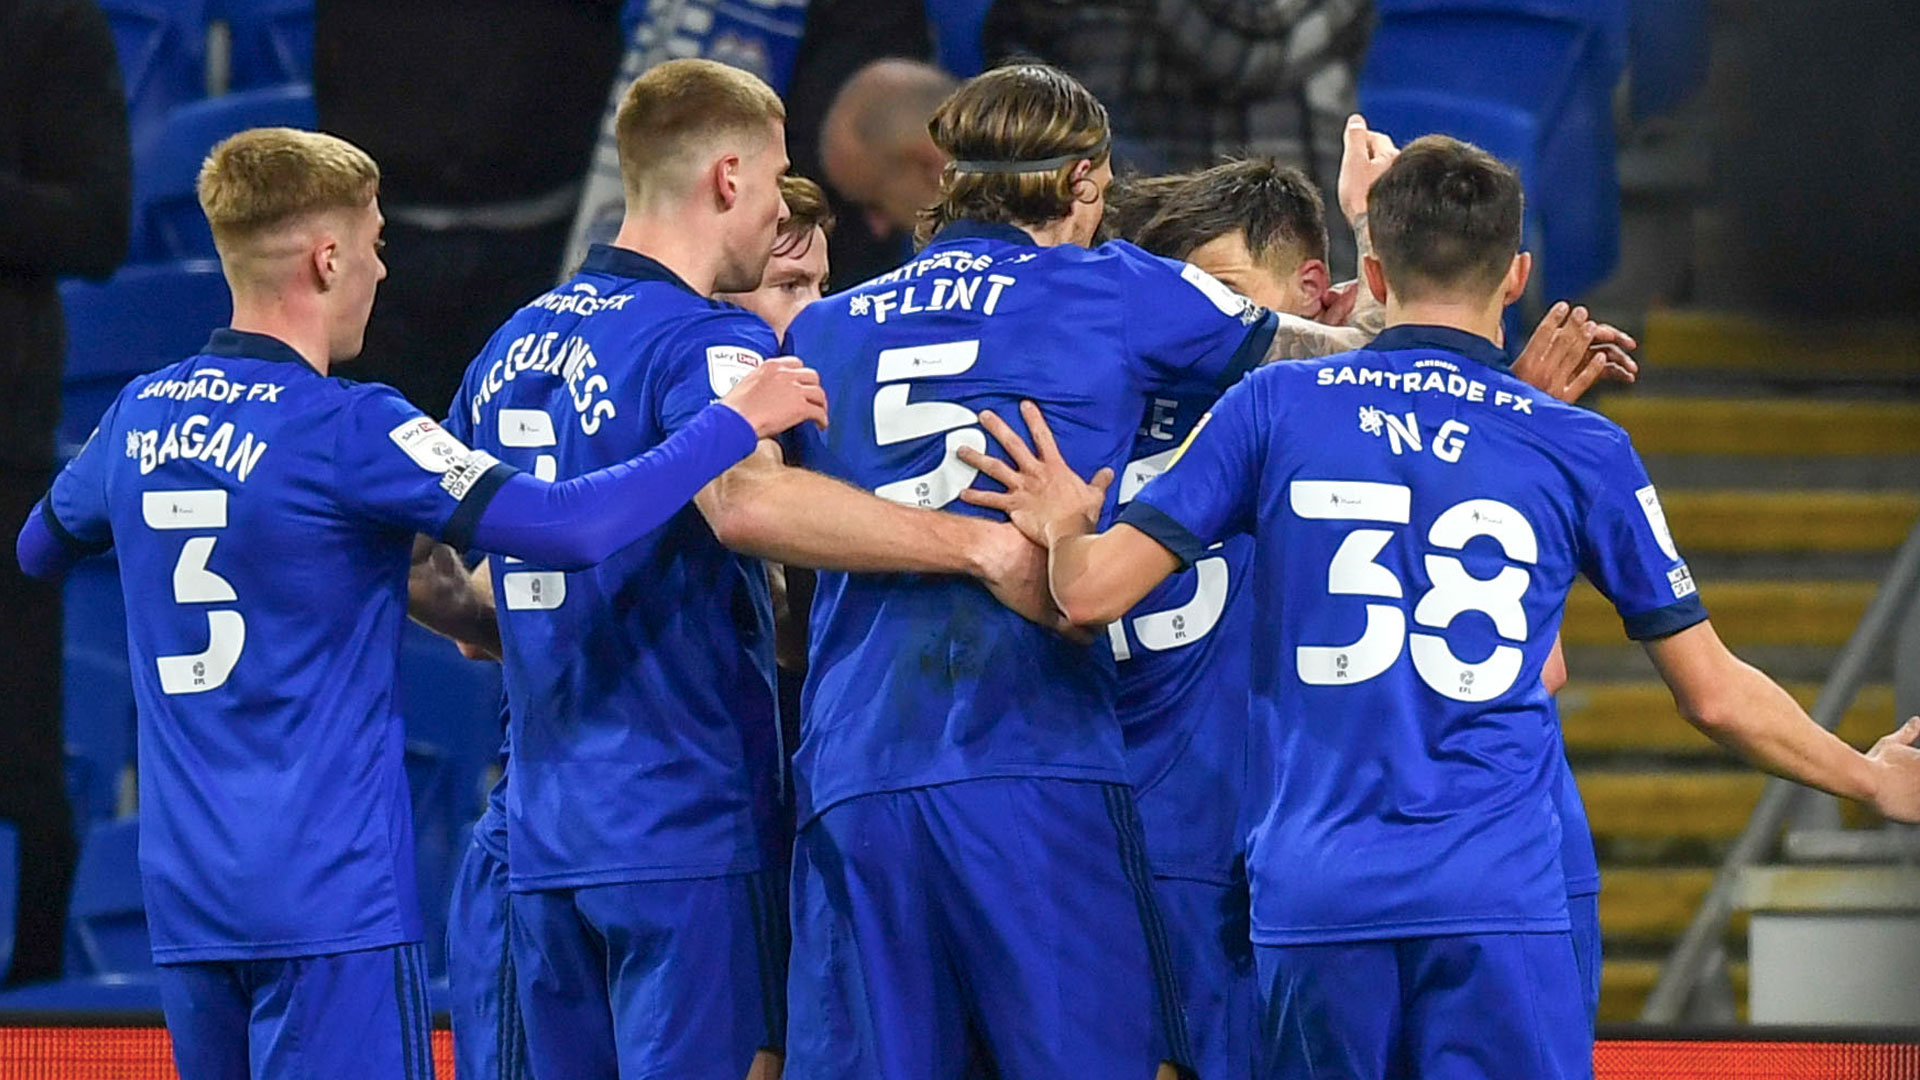 The Bluebirds defeated Stoke City at Cardiff City Stadium on Wednesday night...